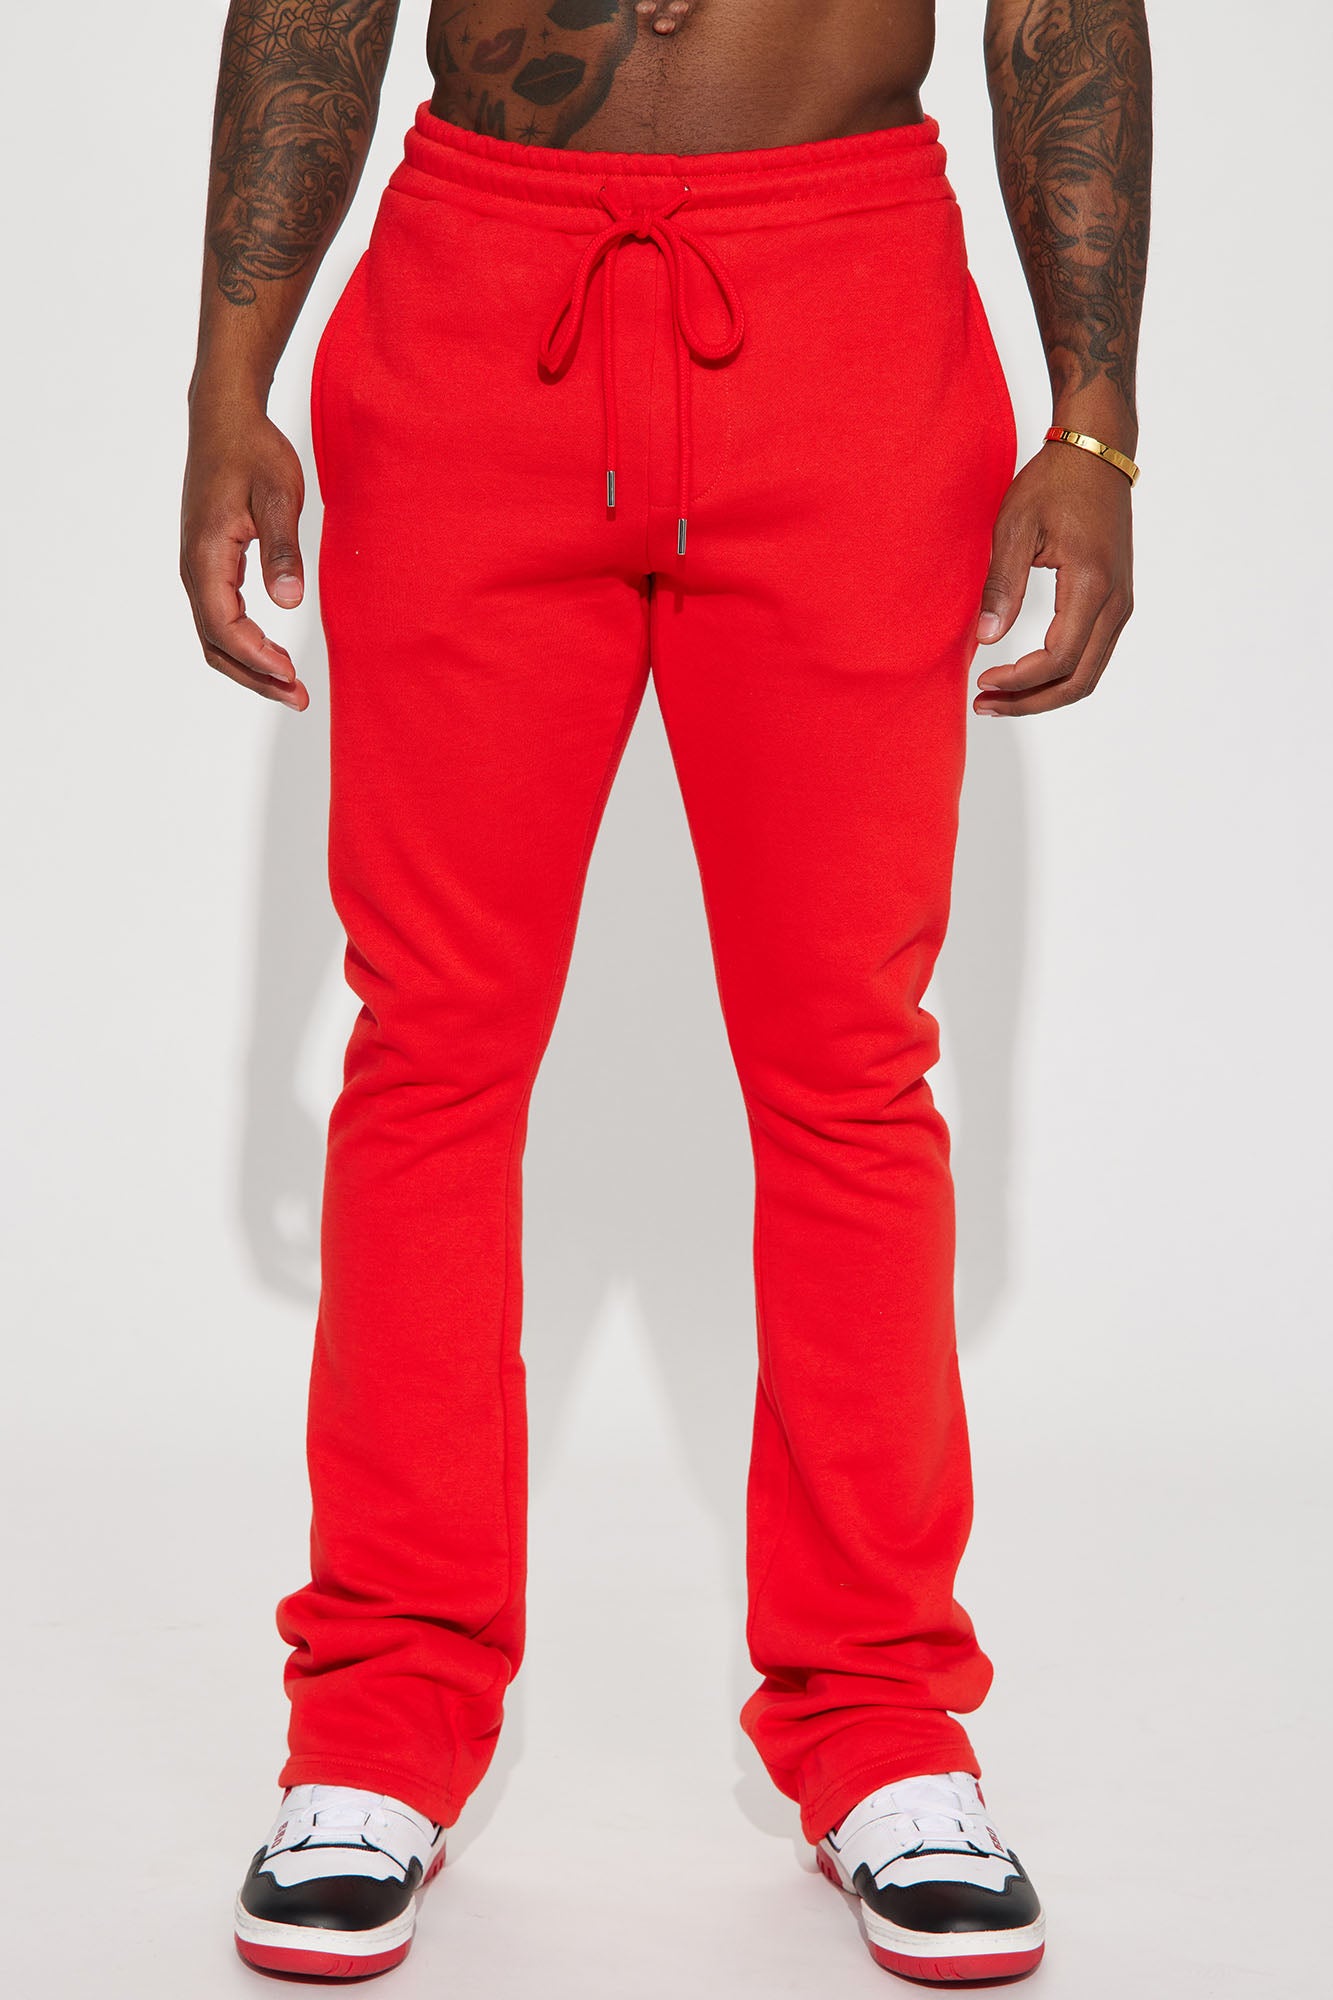 Solid Elastic Waist Slant Pocket Joggers  Pocket sweatpants, Red sweatpants,  Red leggings outfit